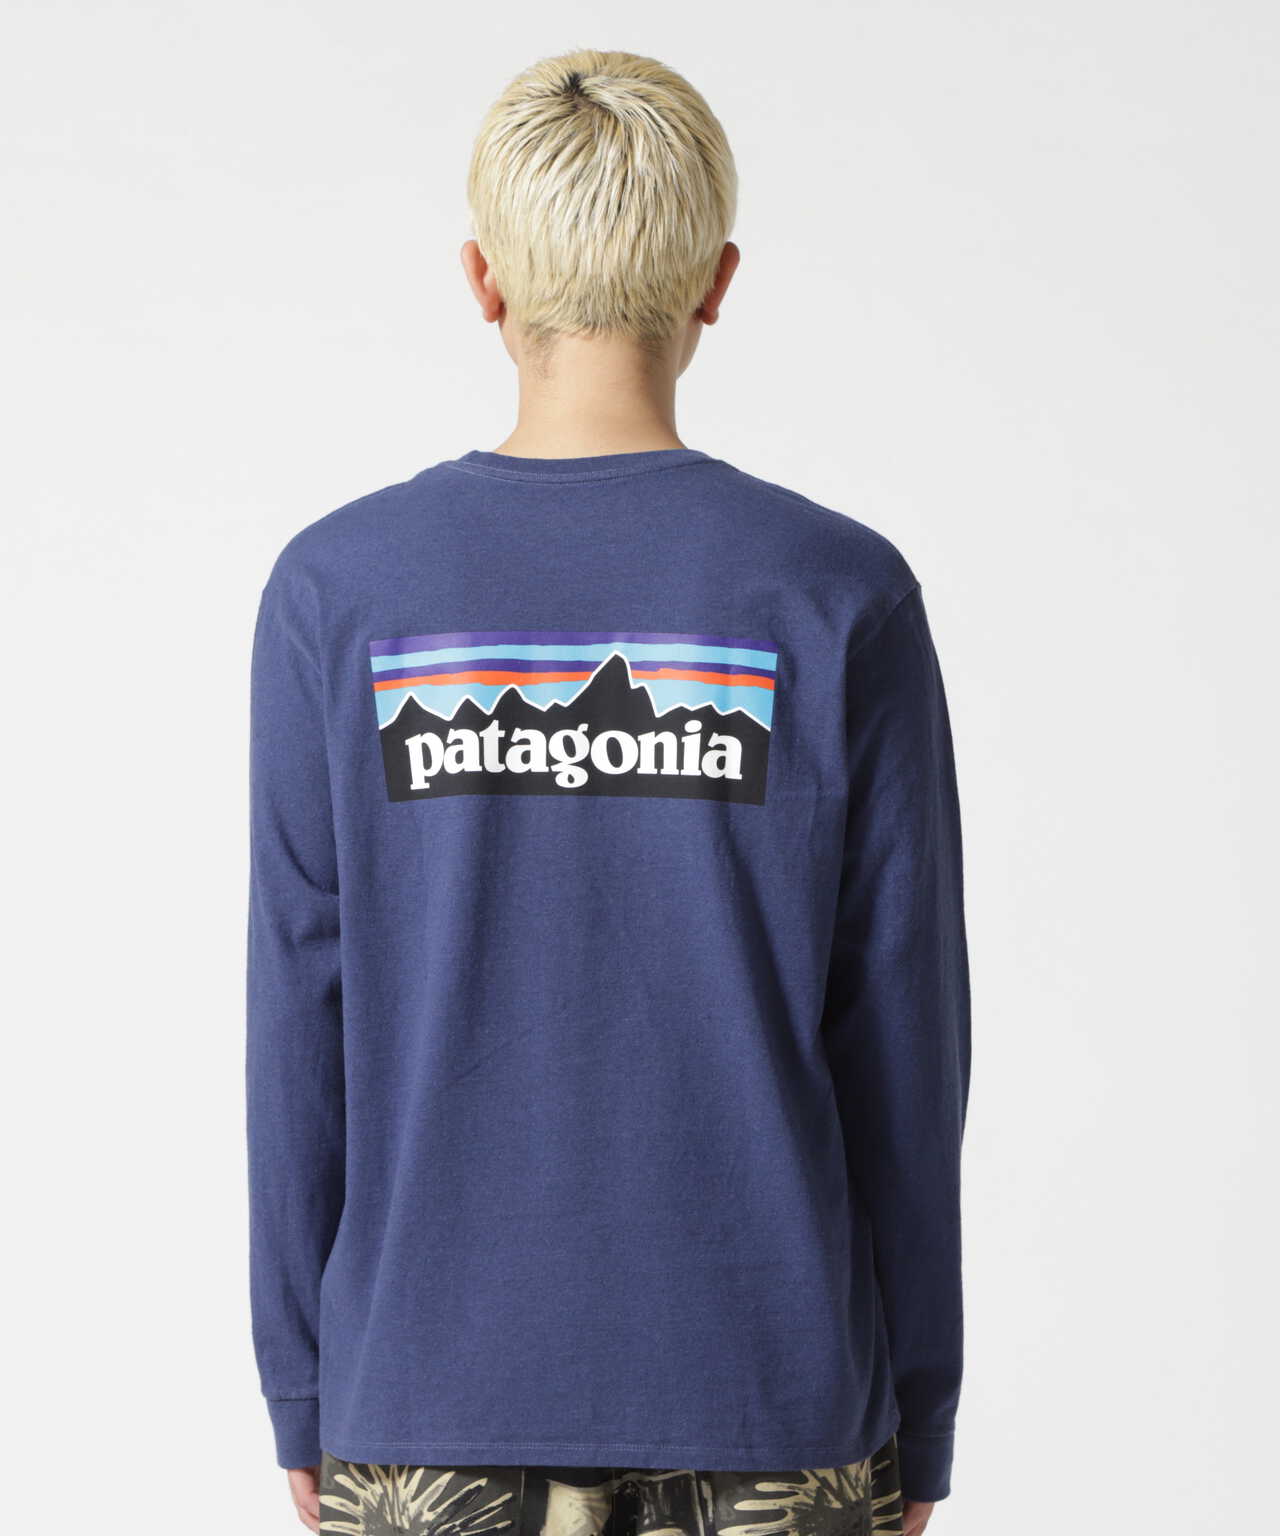 Tシャツ/カットソー(七分/長袖)patagonia ロンT LONG-SLEEVED P-6 パミス XL